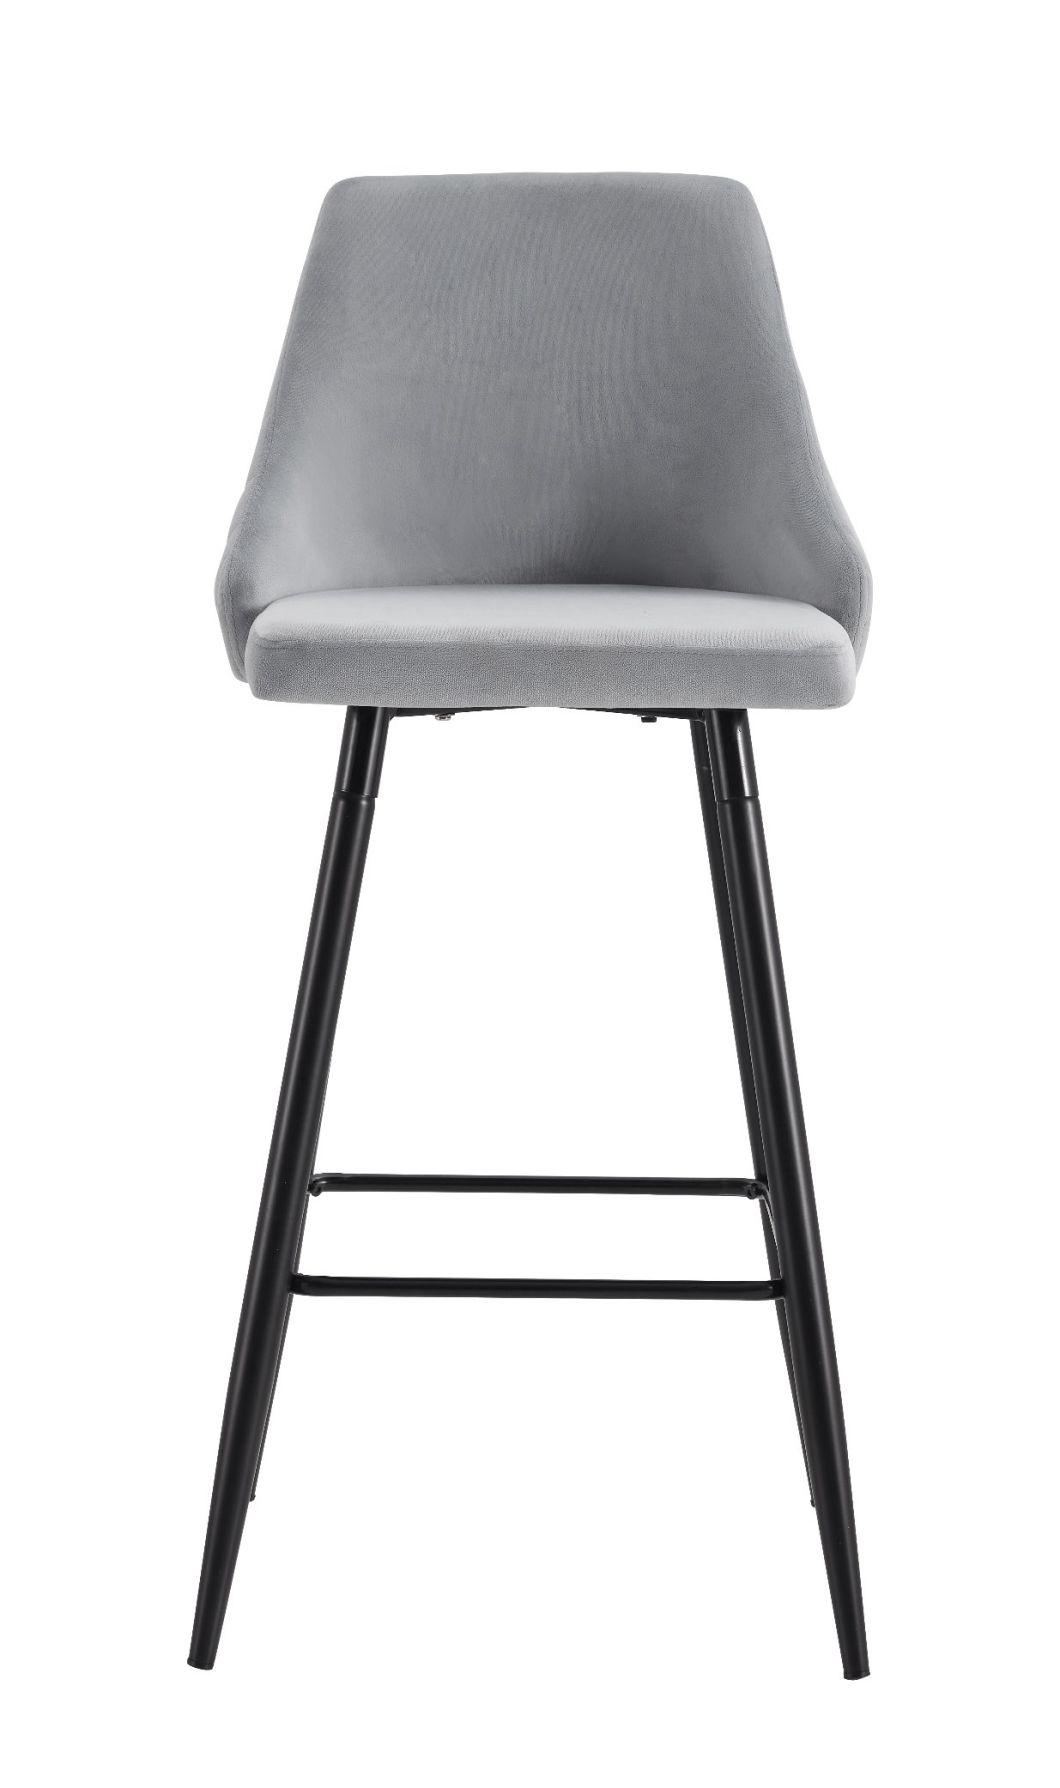 Luxury Diamond Type Back Design Coffee Dessert Shop Breakfast Kitchen Bar Stool High Chair with Install Non-Slip Mute Foot